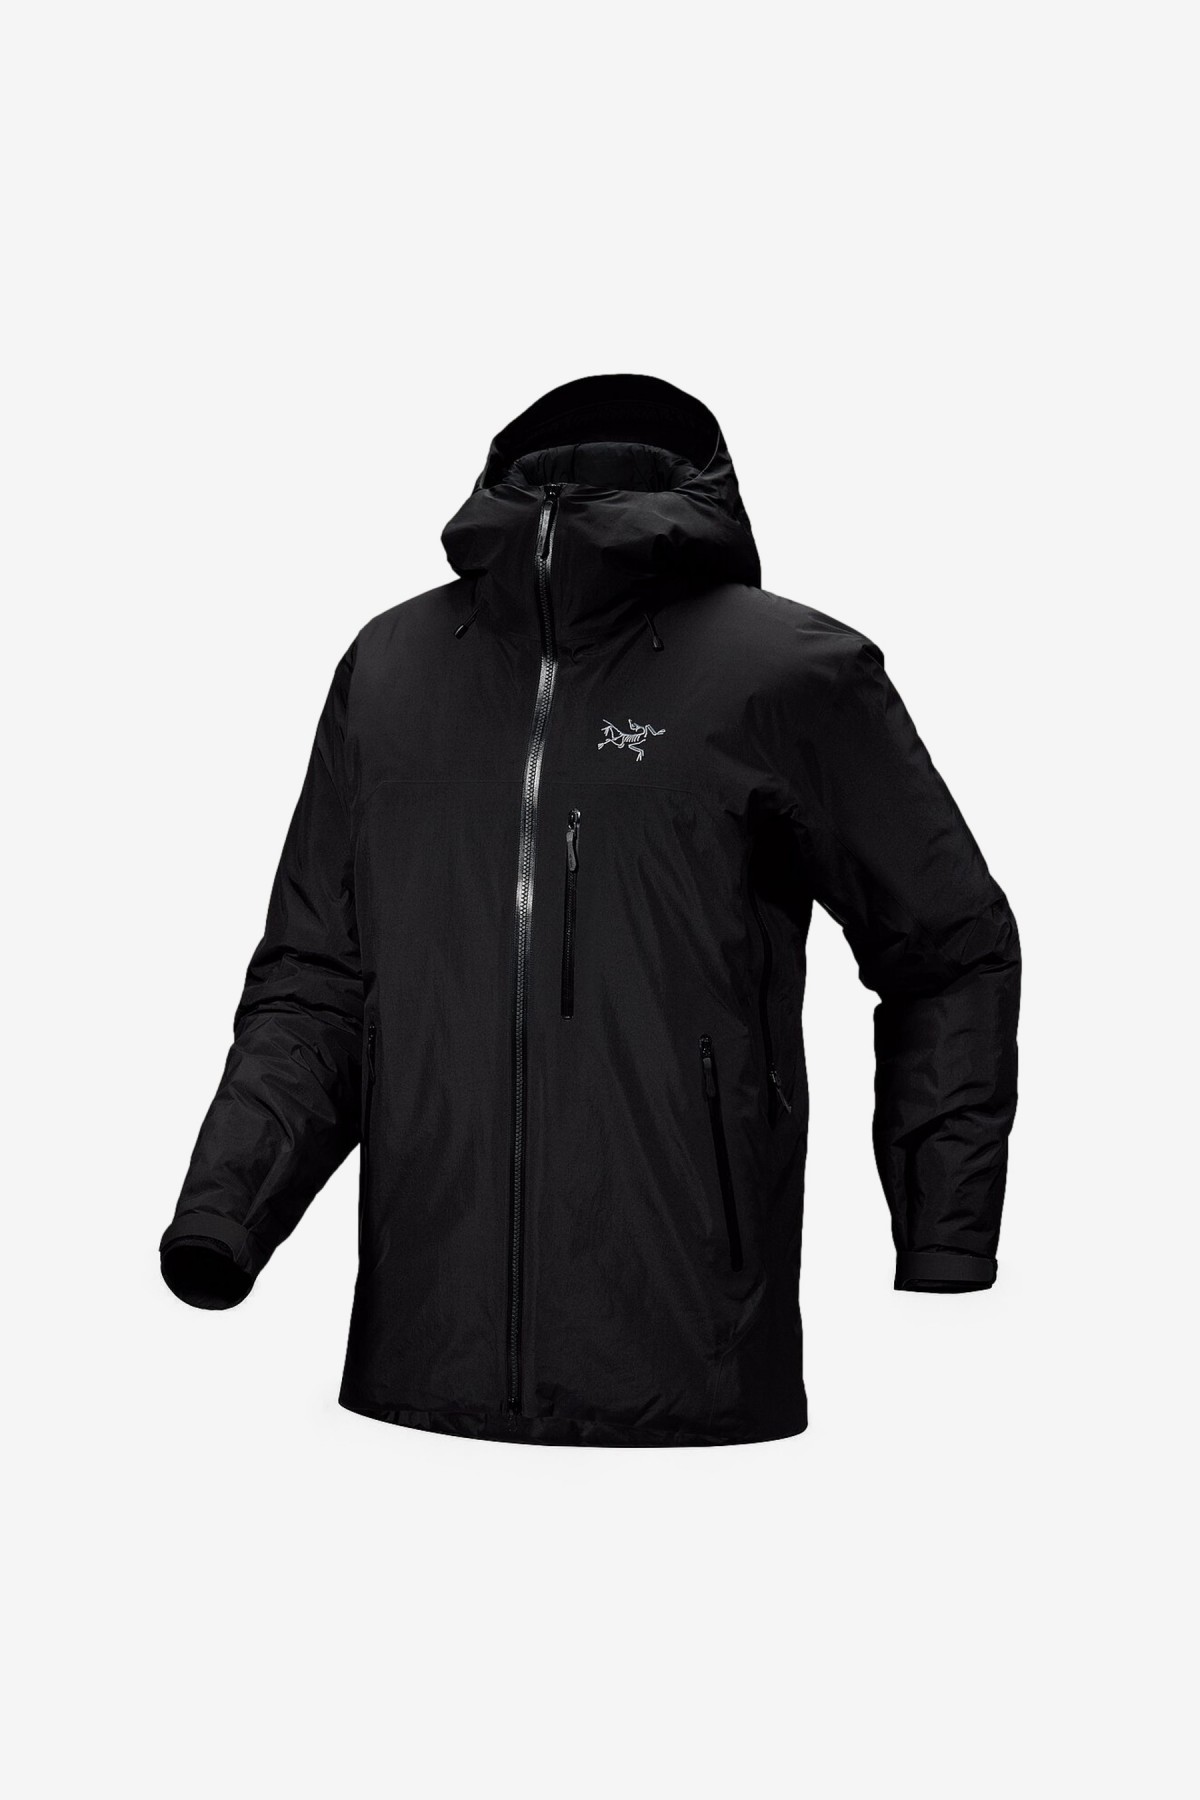 Arc'teryx Beta Insulated Jacket in Black